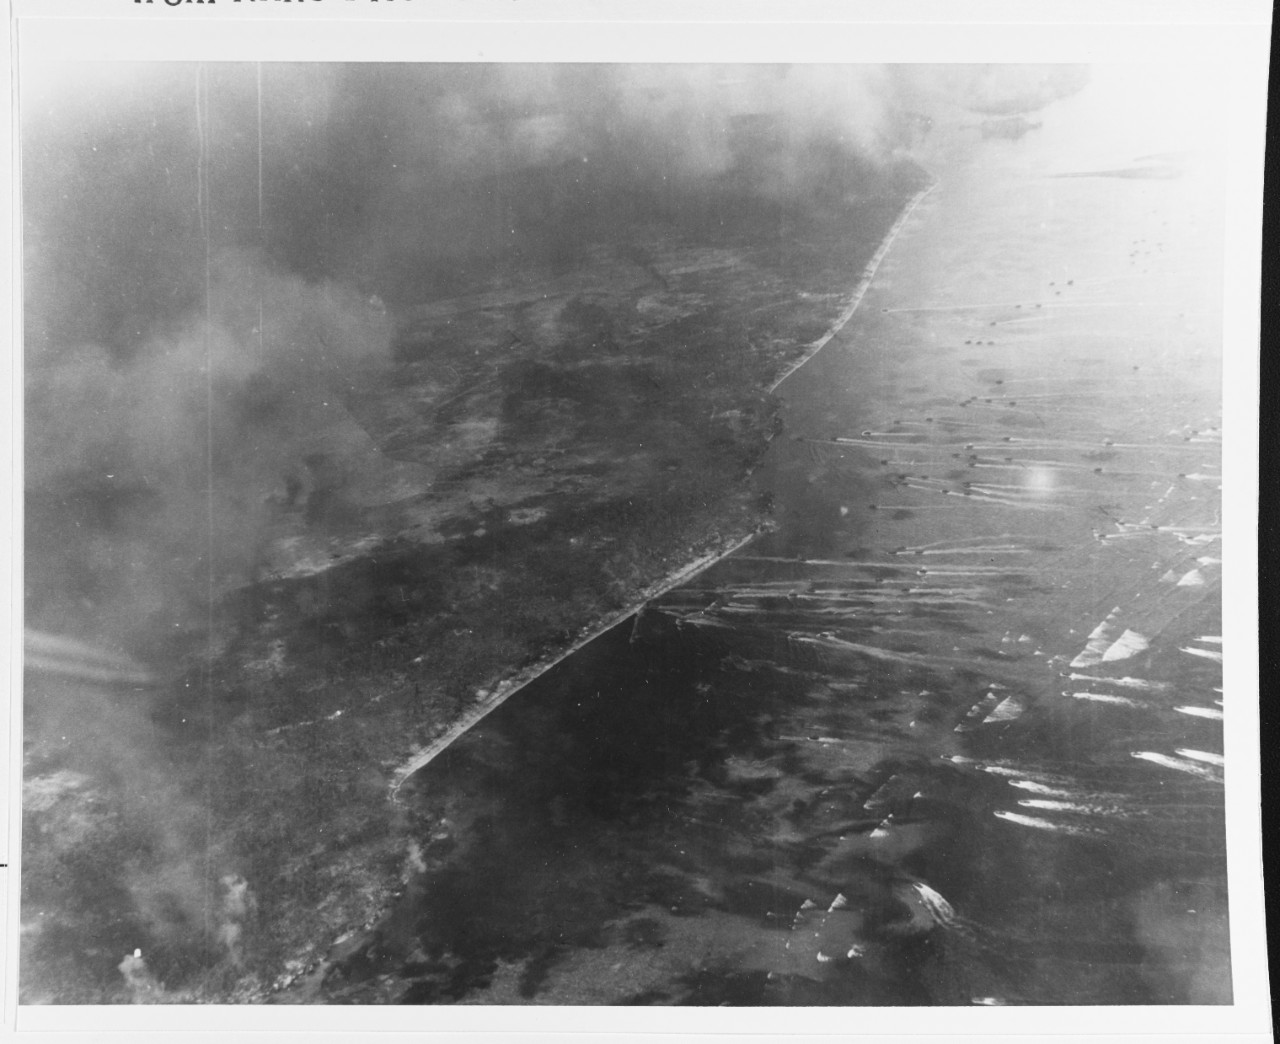 Peleliu Operation, September 1944.